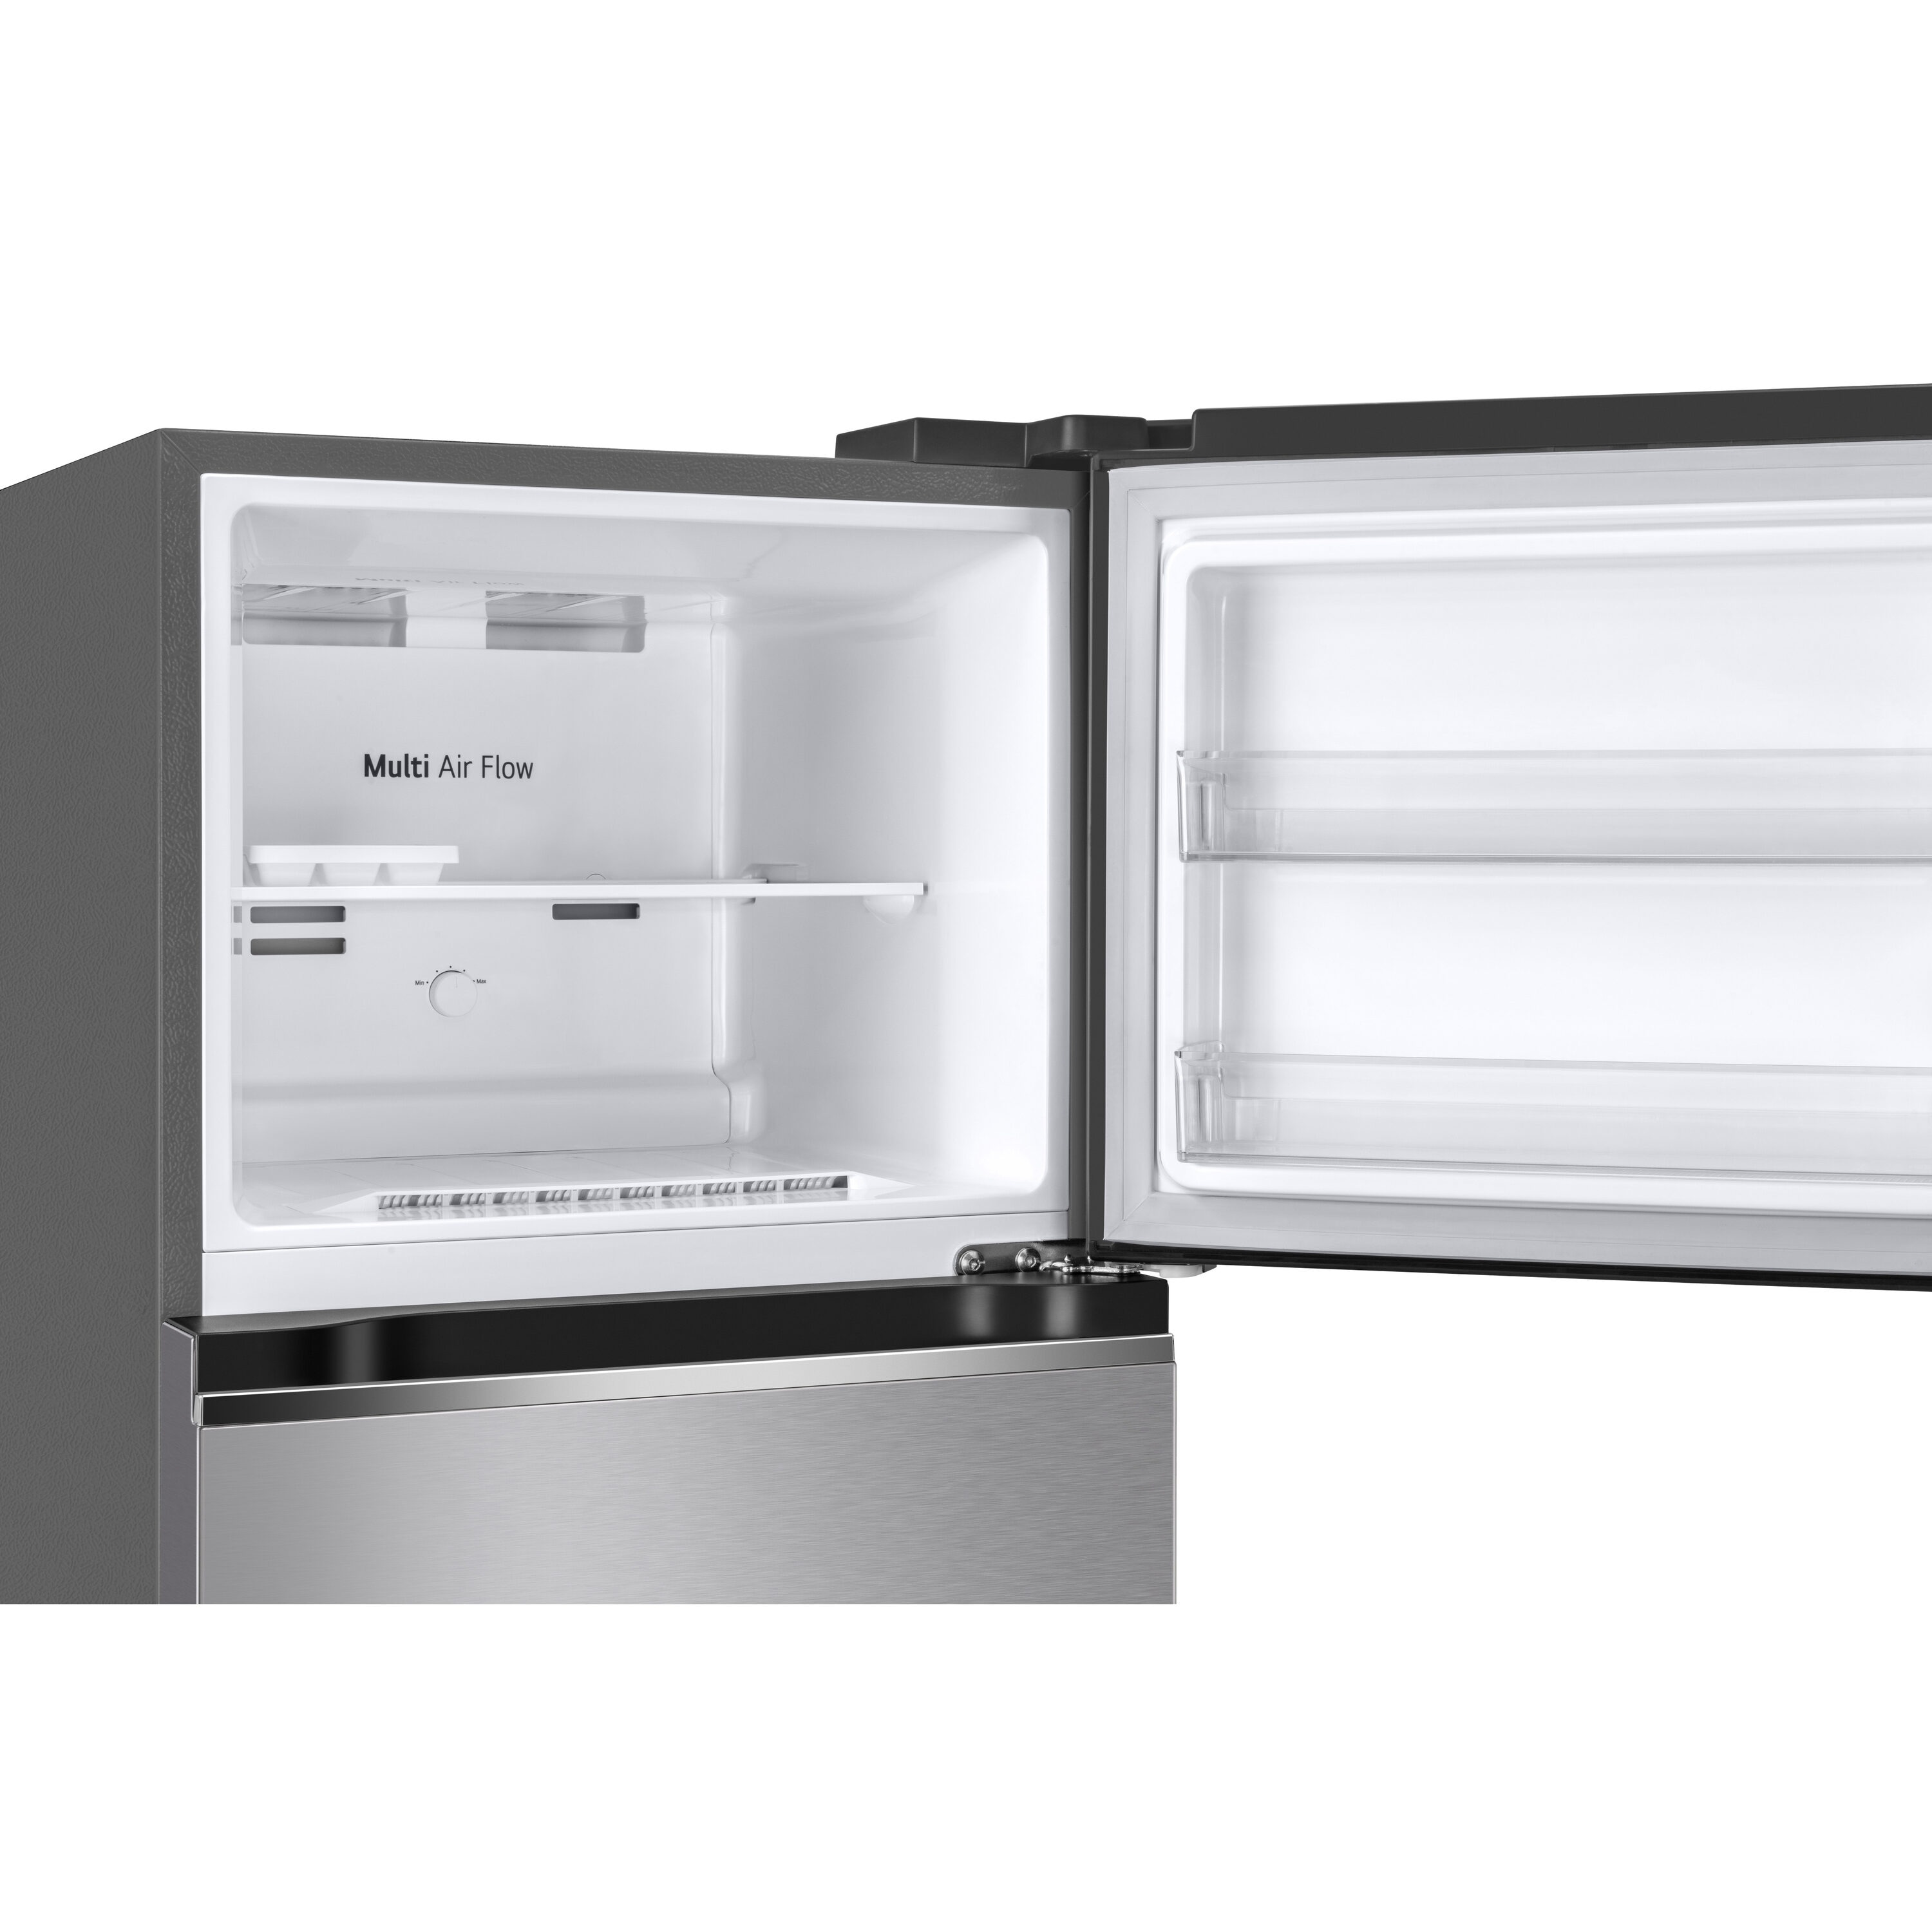 LG 6.9-cu ft Counter-depth Top-Freezer Refrigerator (Platinum Silver)  ENERGY STAR in the Top-Freezer Refrigerators department at